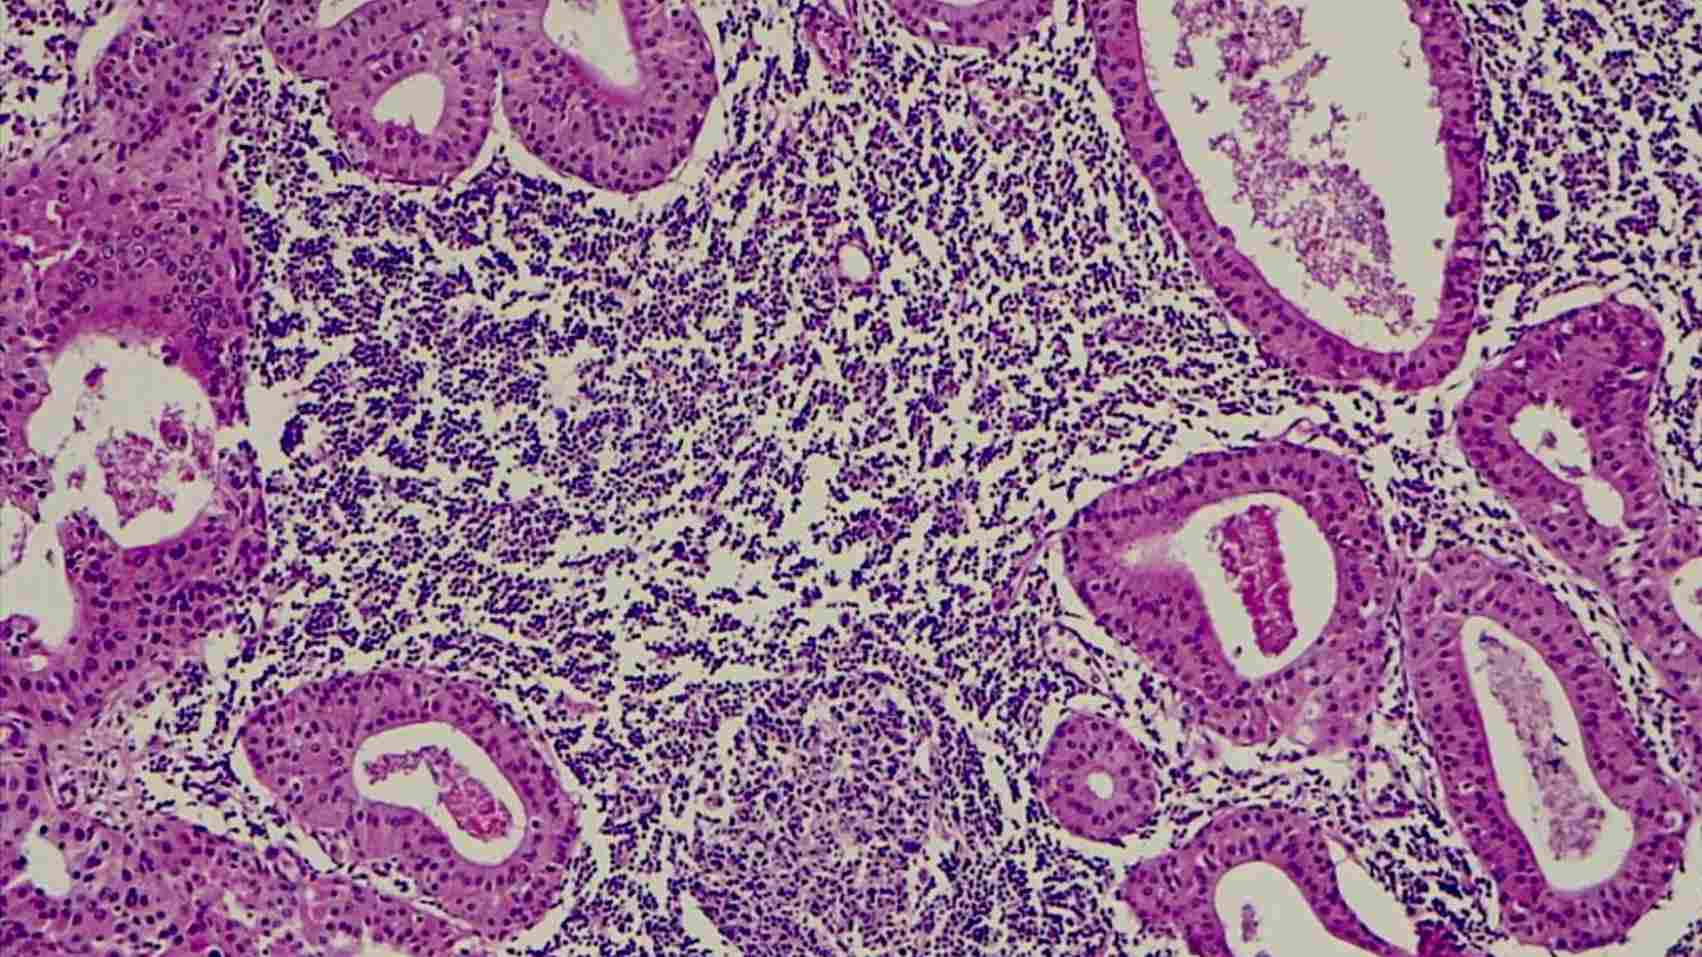 Salivary Gland Cancer May Be Treated With P53